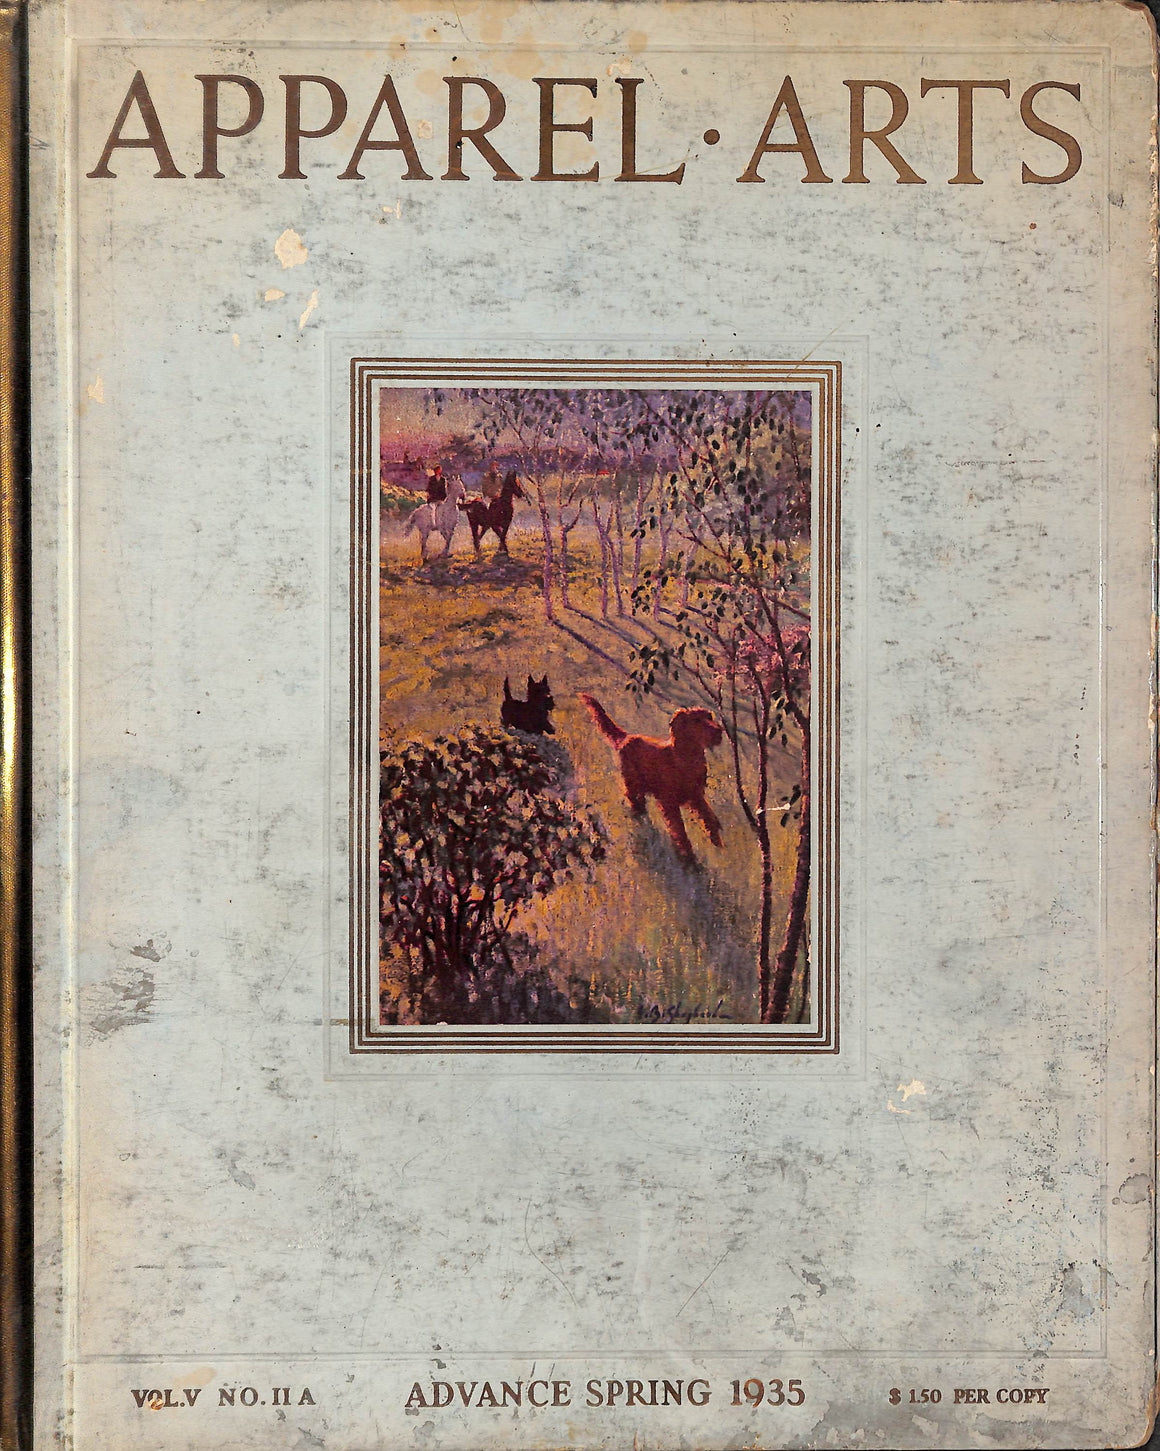 Apparel Arts Advance Spring 1935 (SOLD)